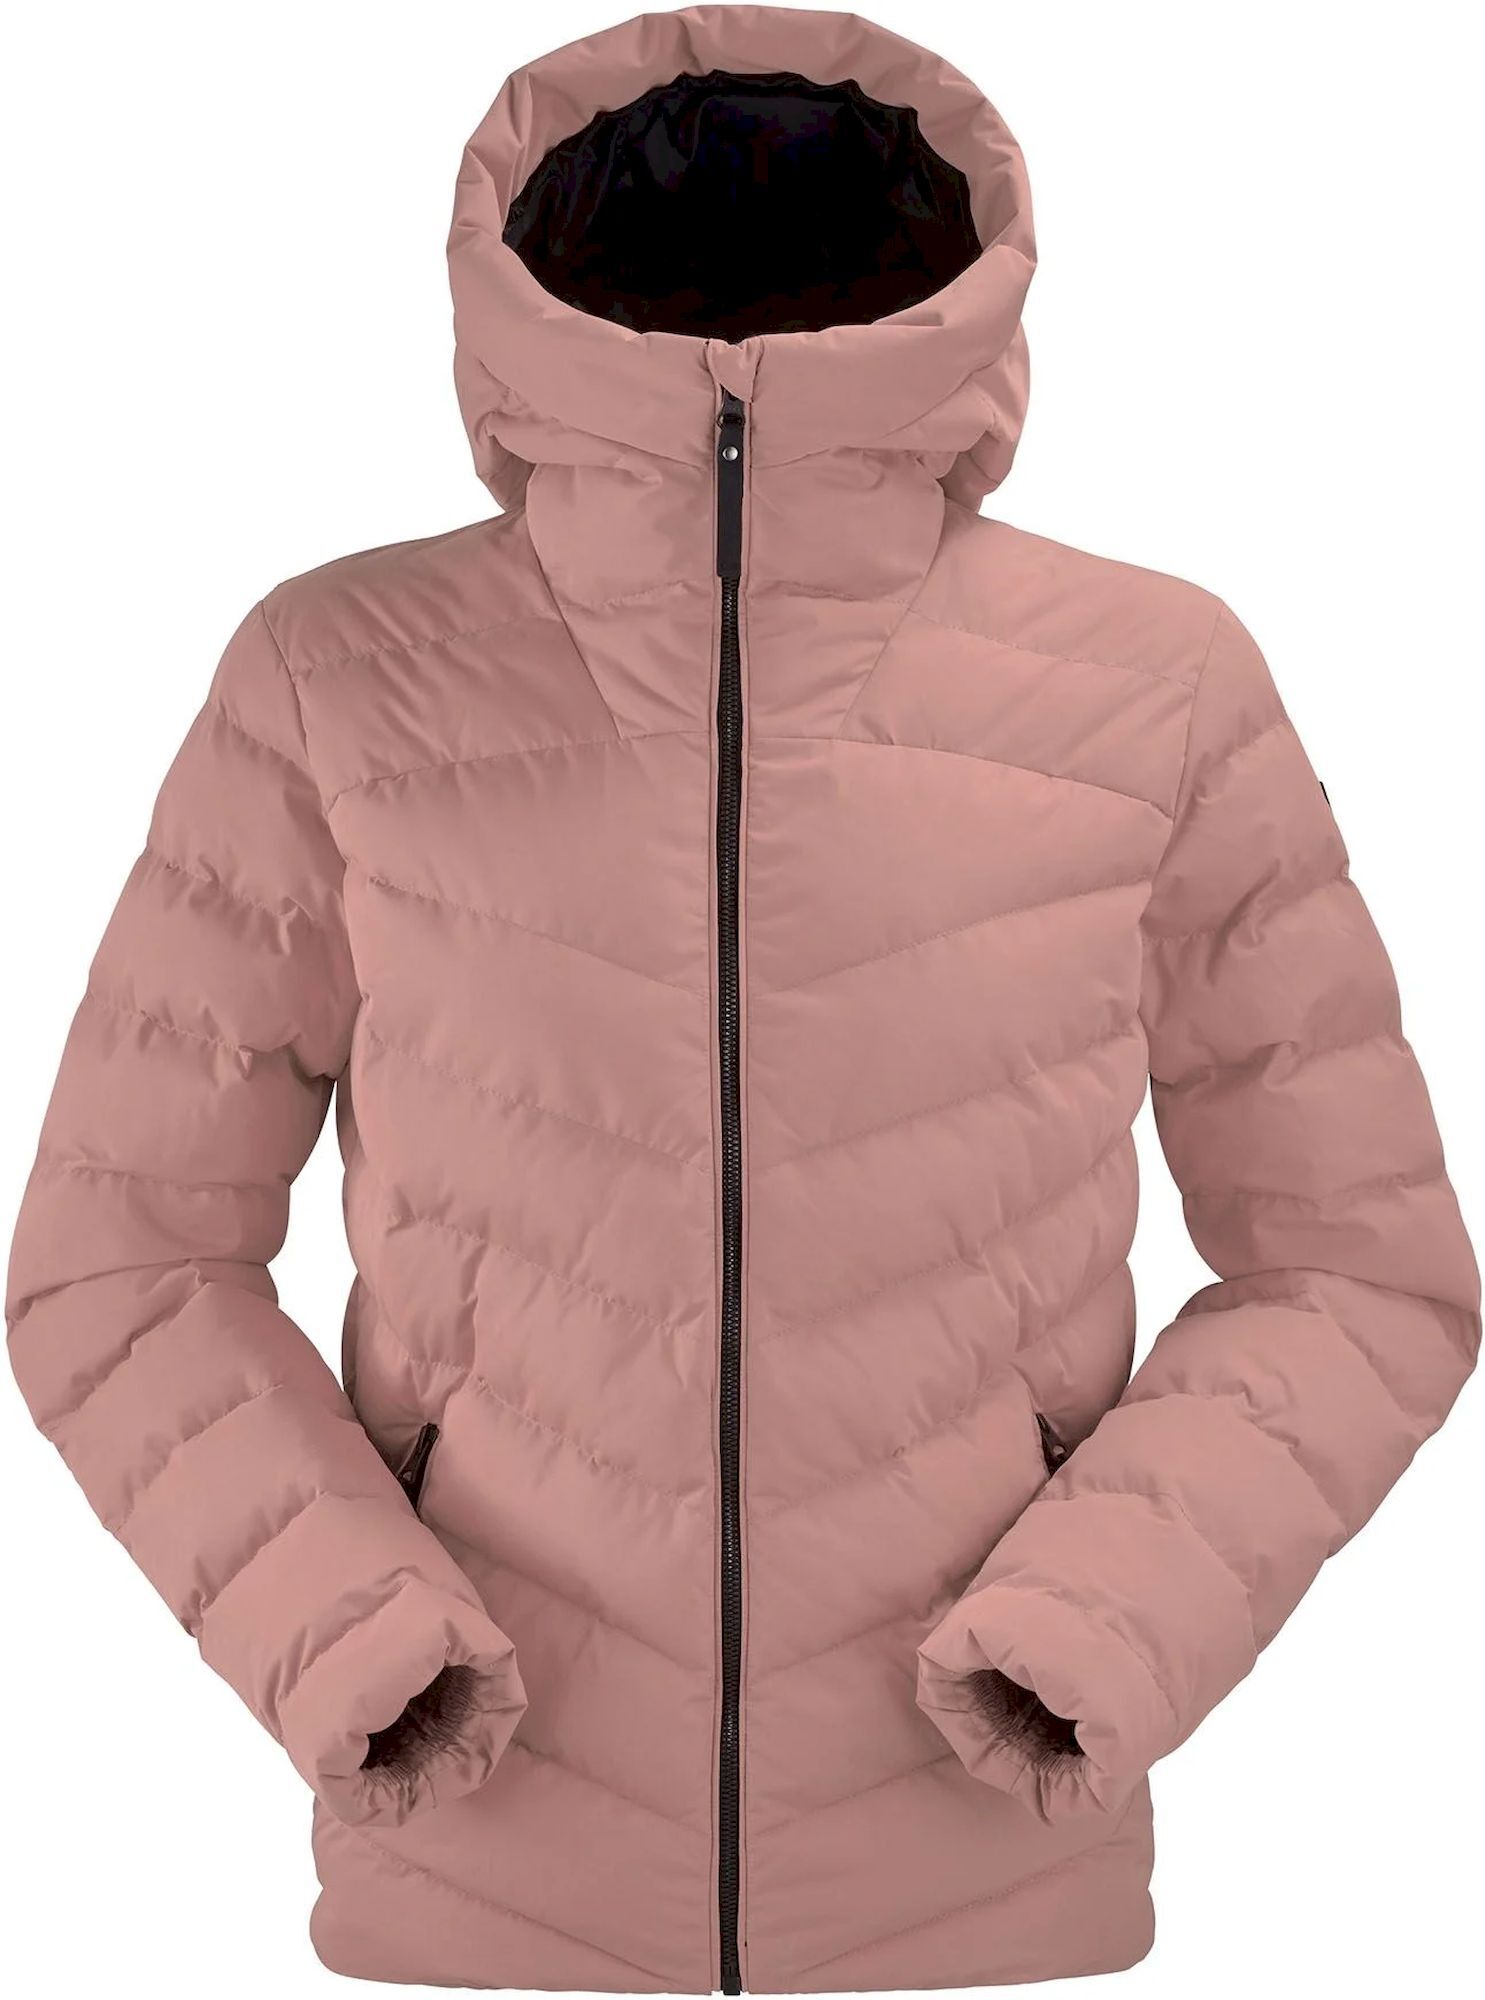 Eider Venosc Hoodie W - Insulated jacket - Women's